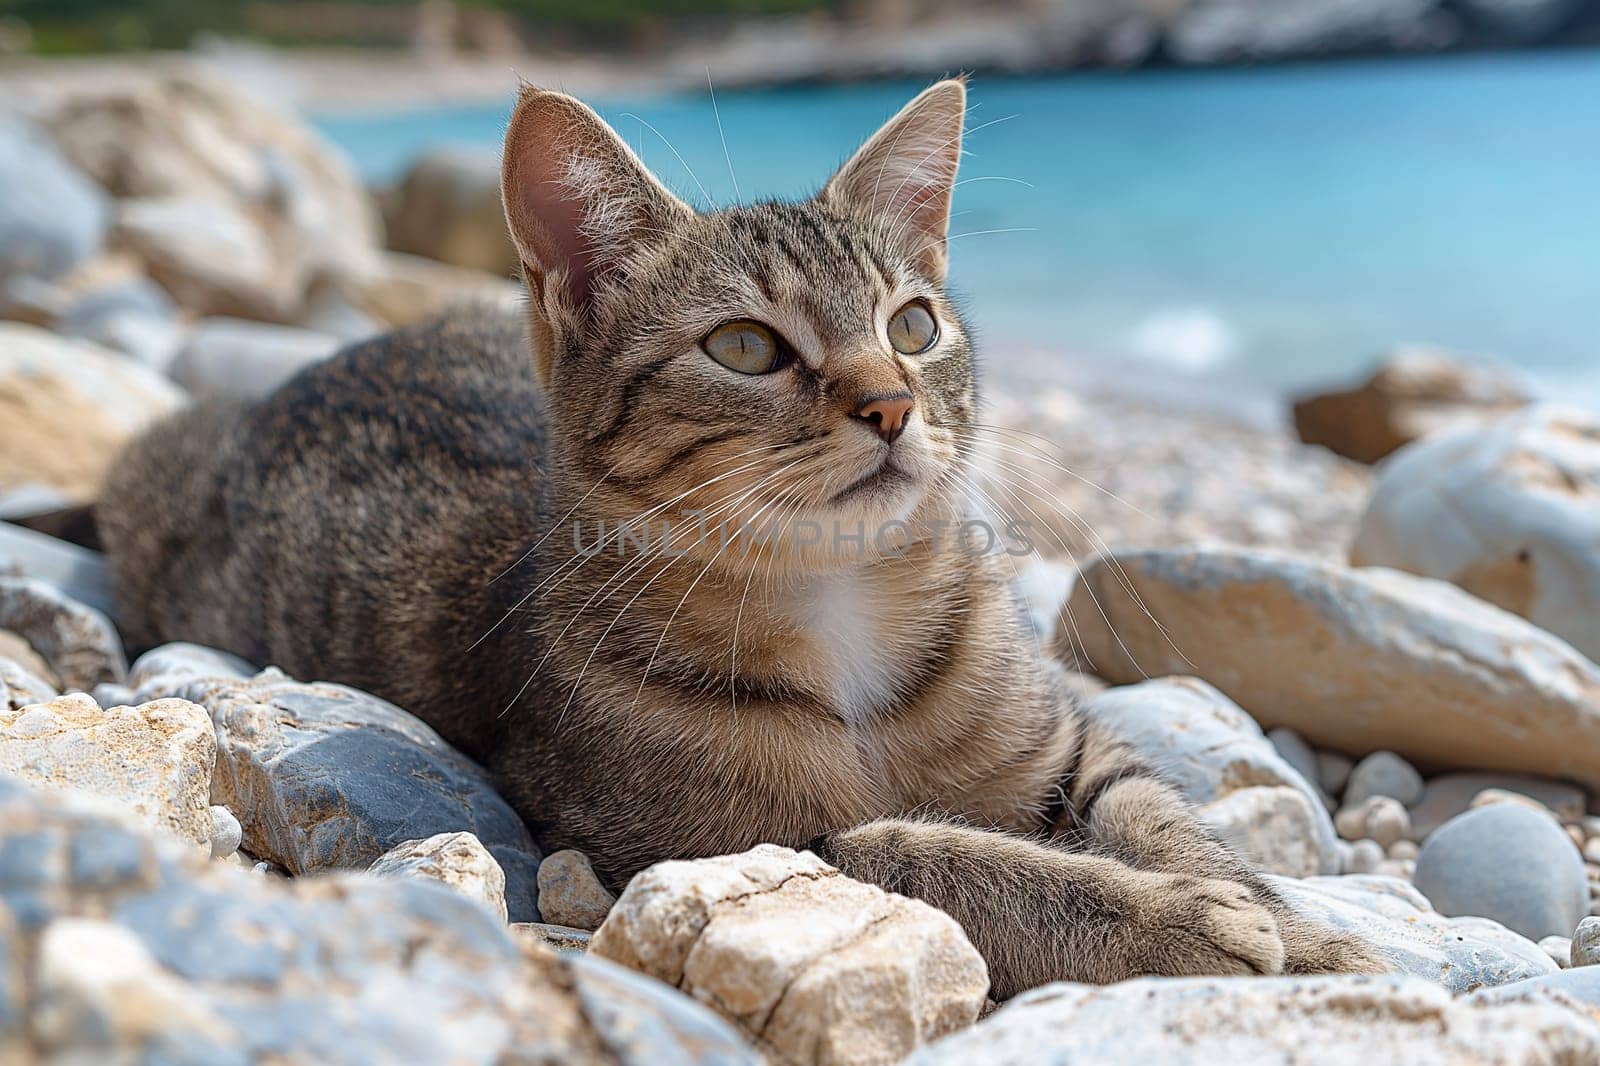 A cat on a pebble beach on sunny day